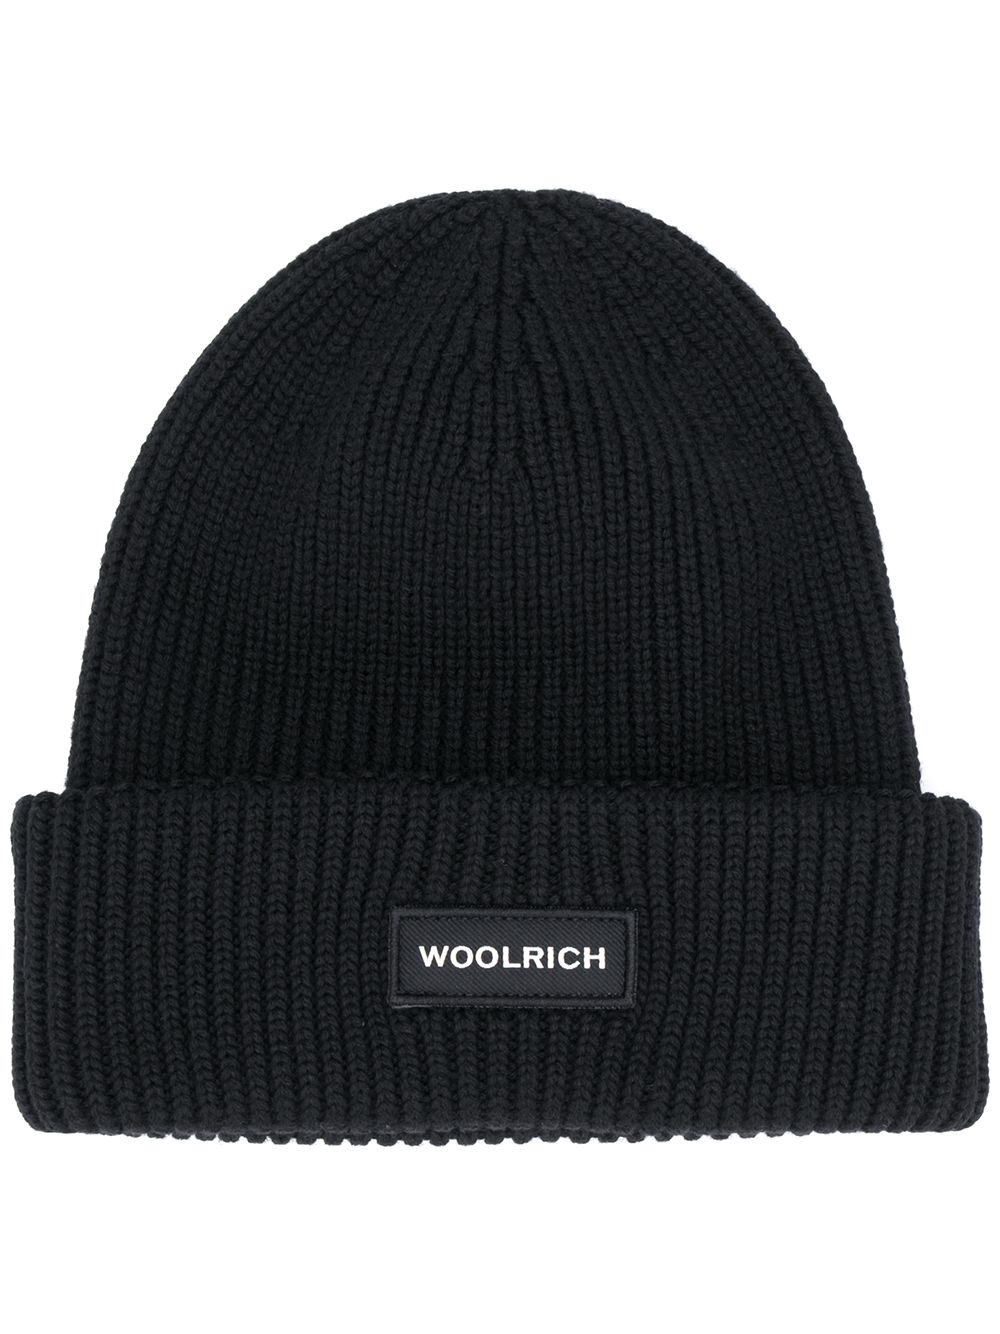 фото Woolrich шапка бини в рубчик с нашивкой-логотипом